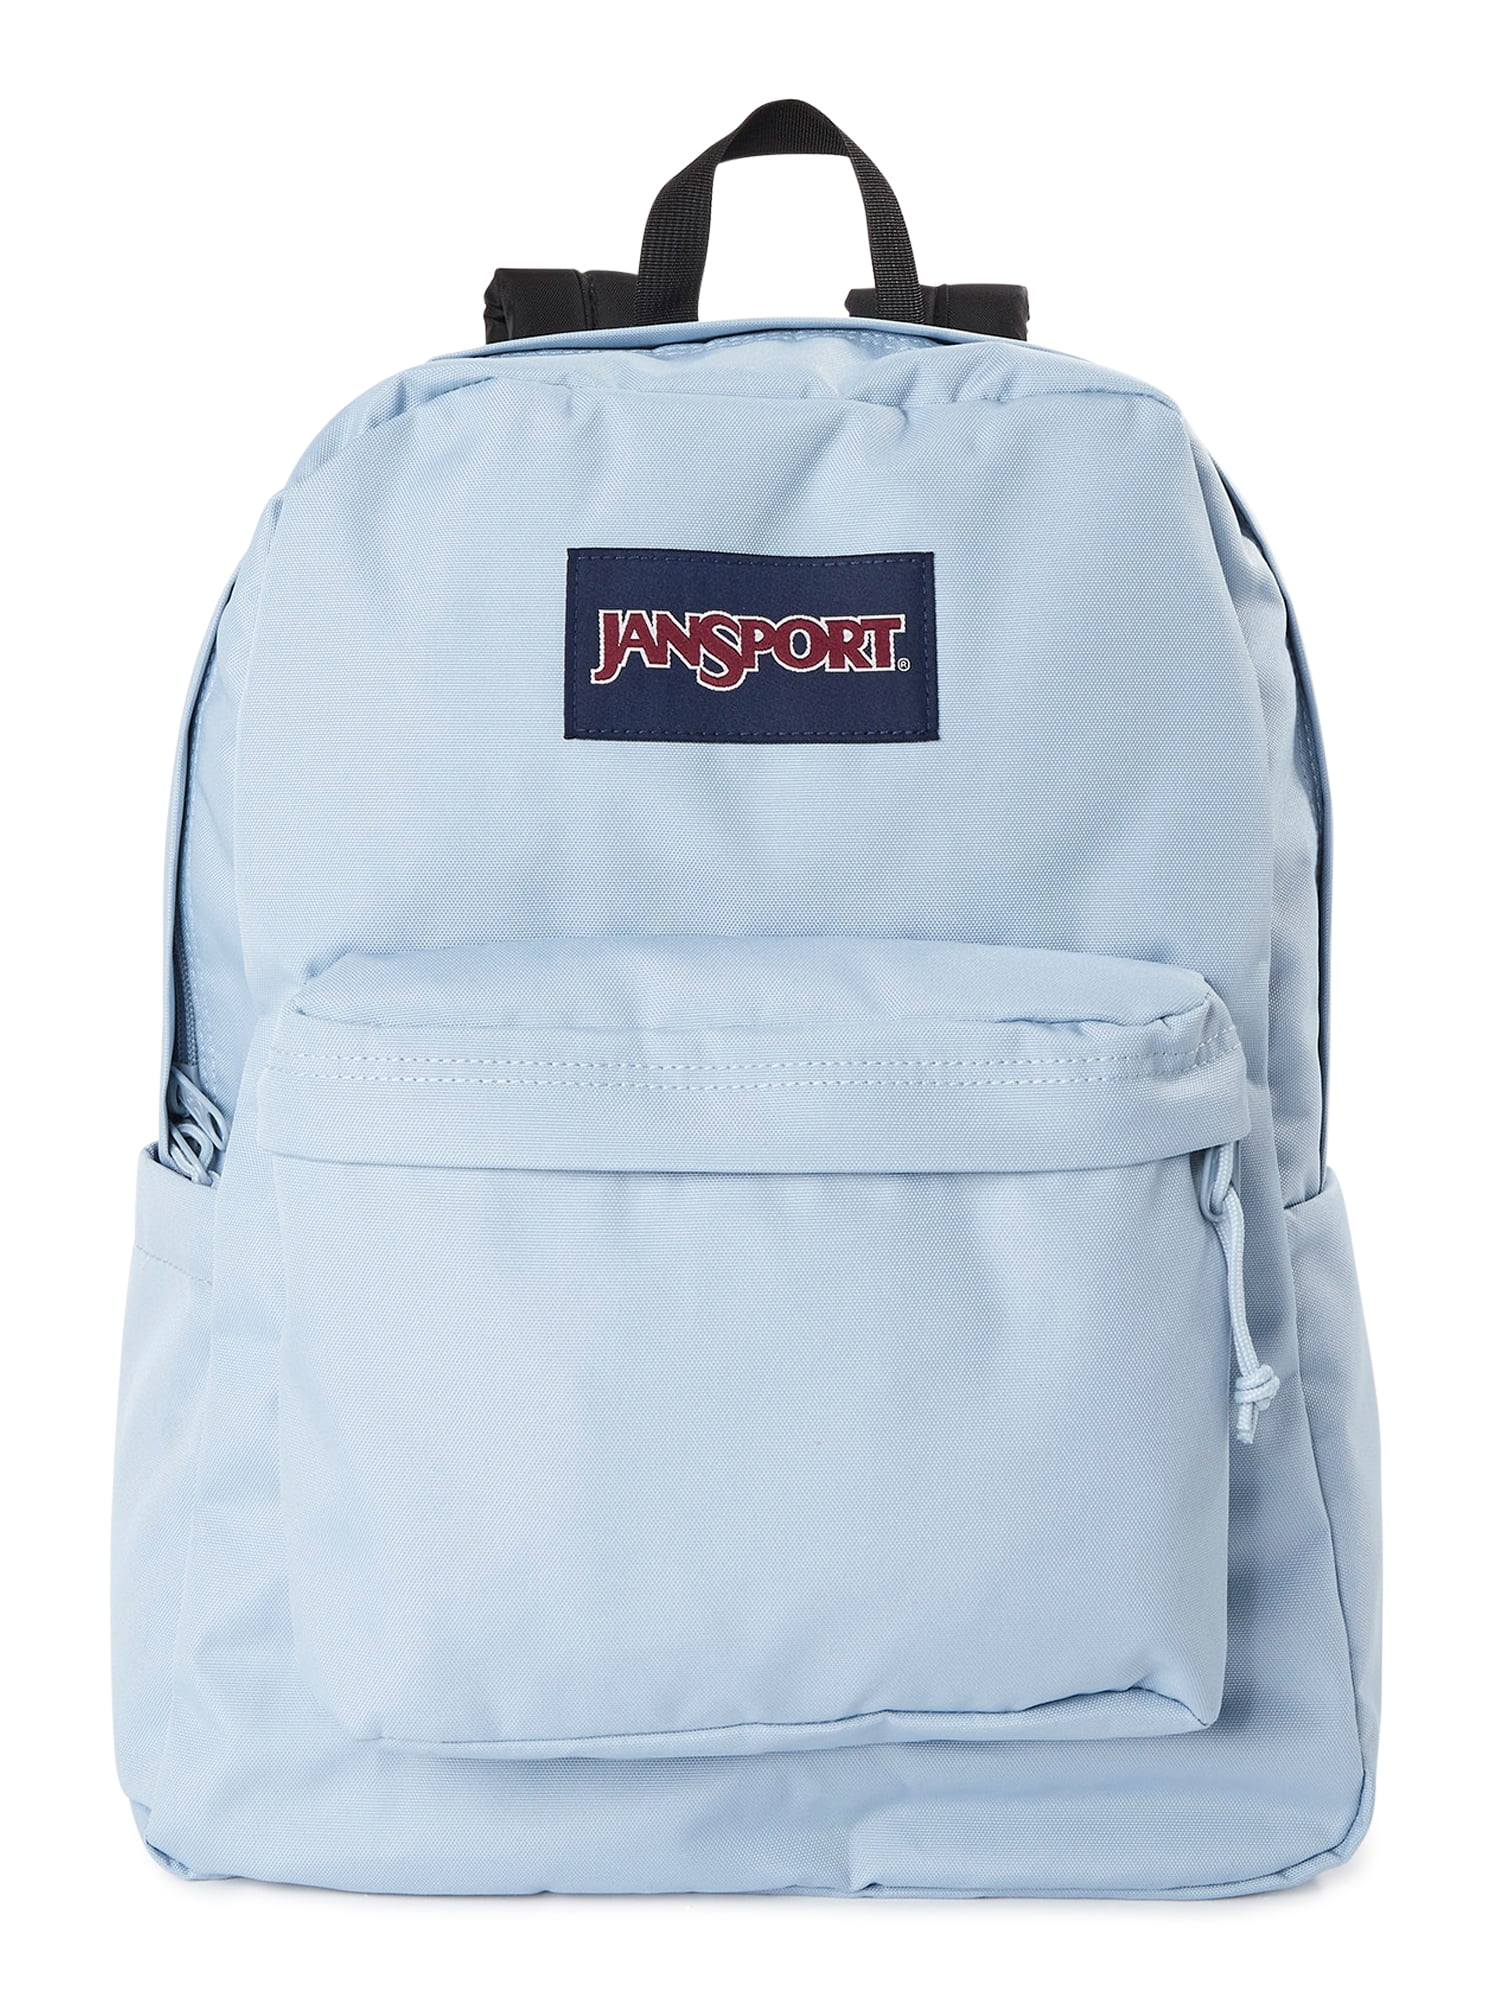 15 Amazing School Bag Brands - Writtygritty